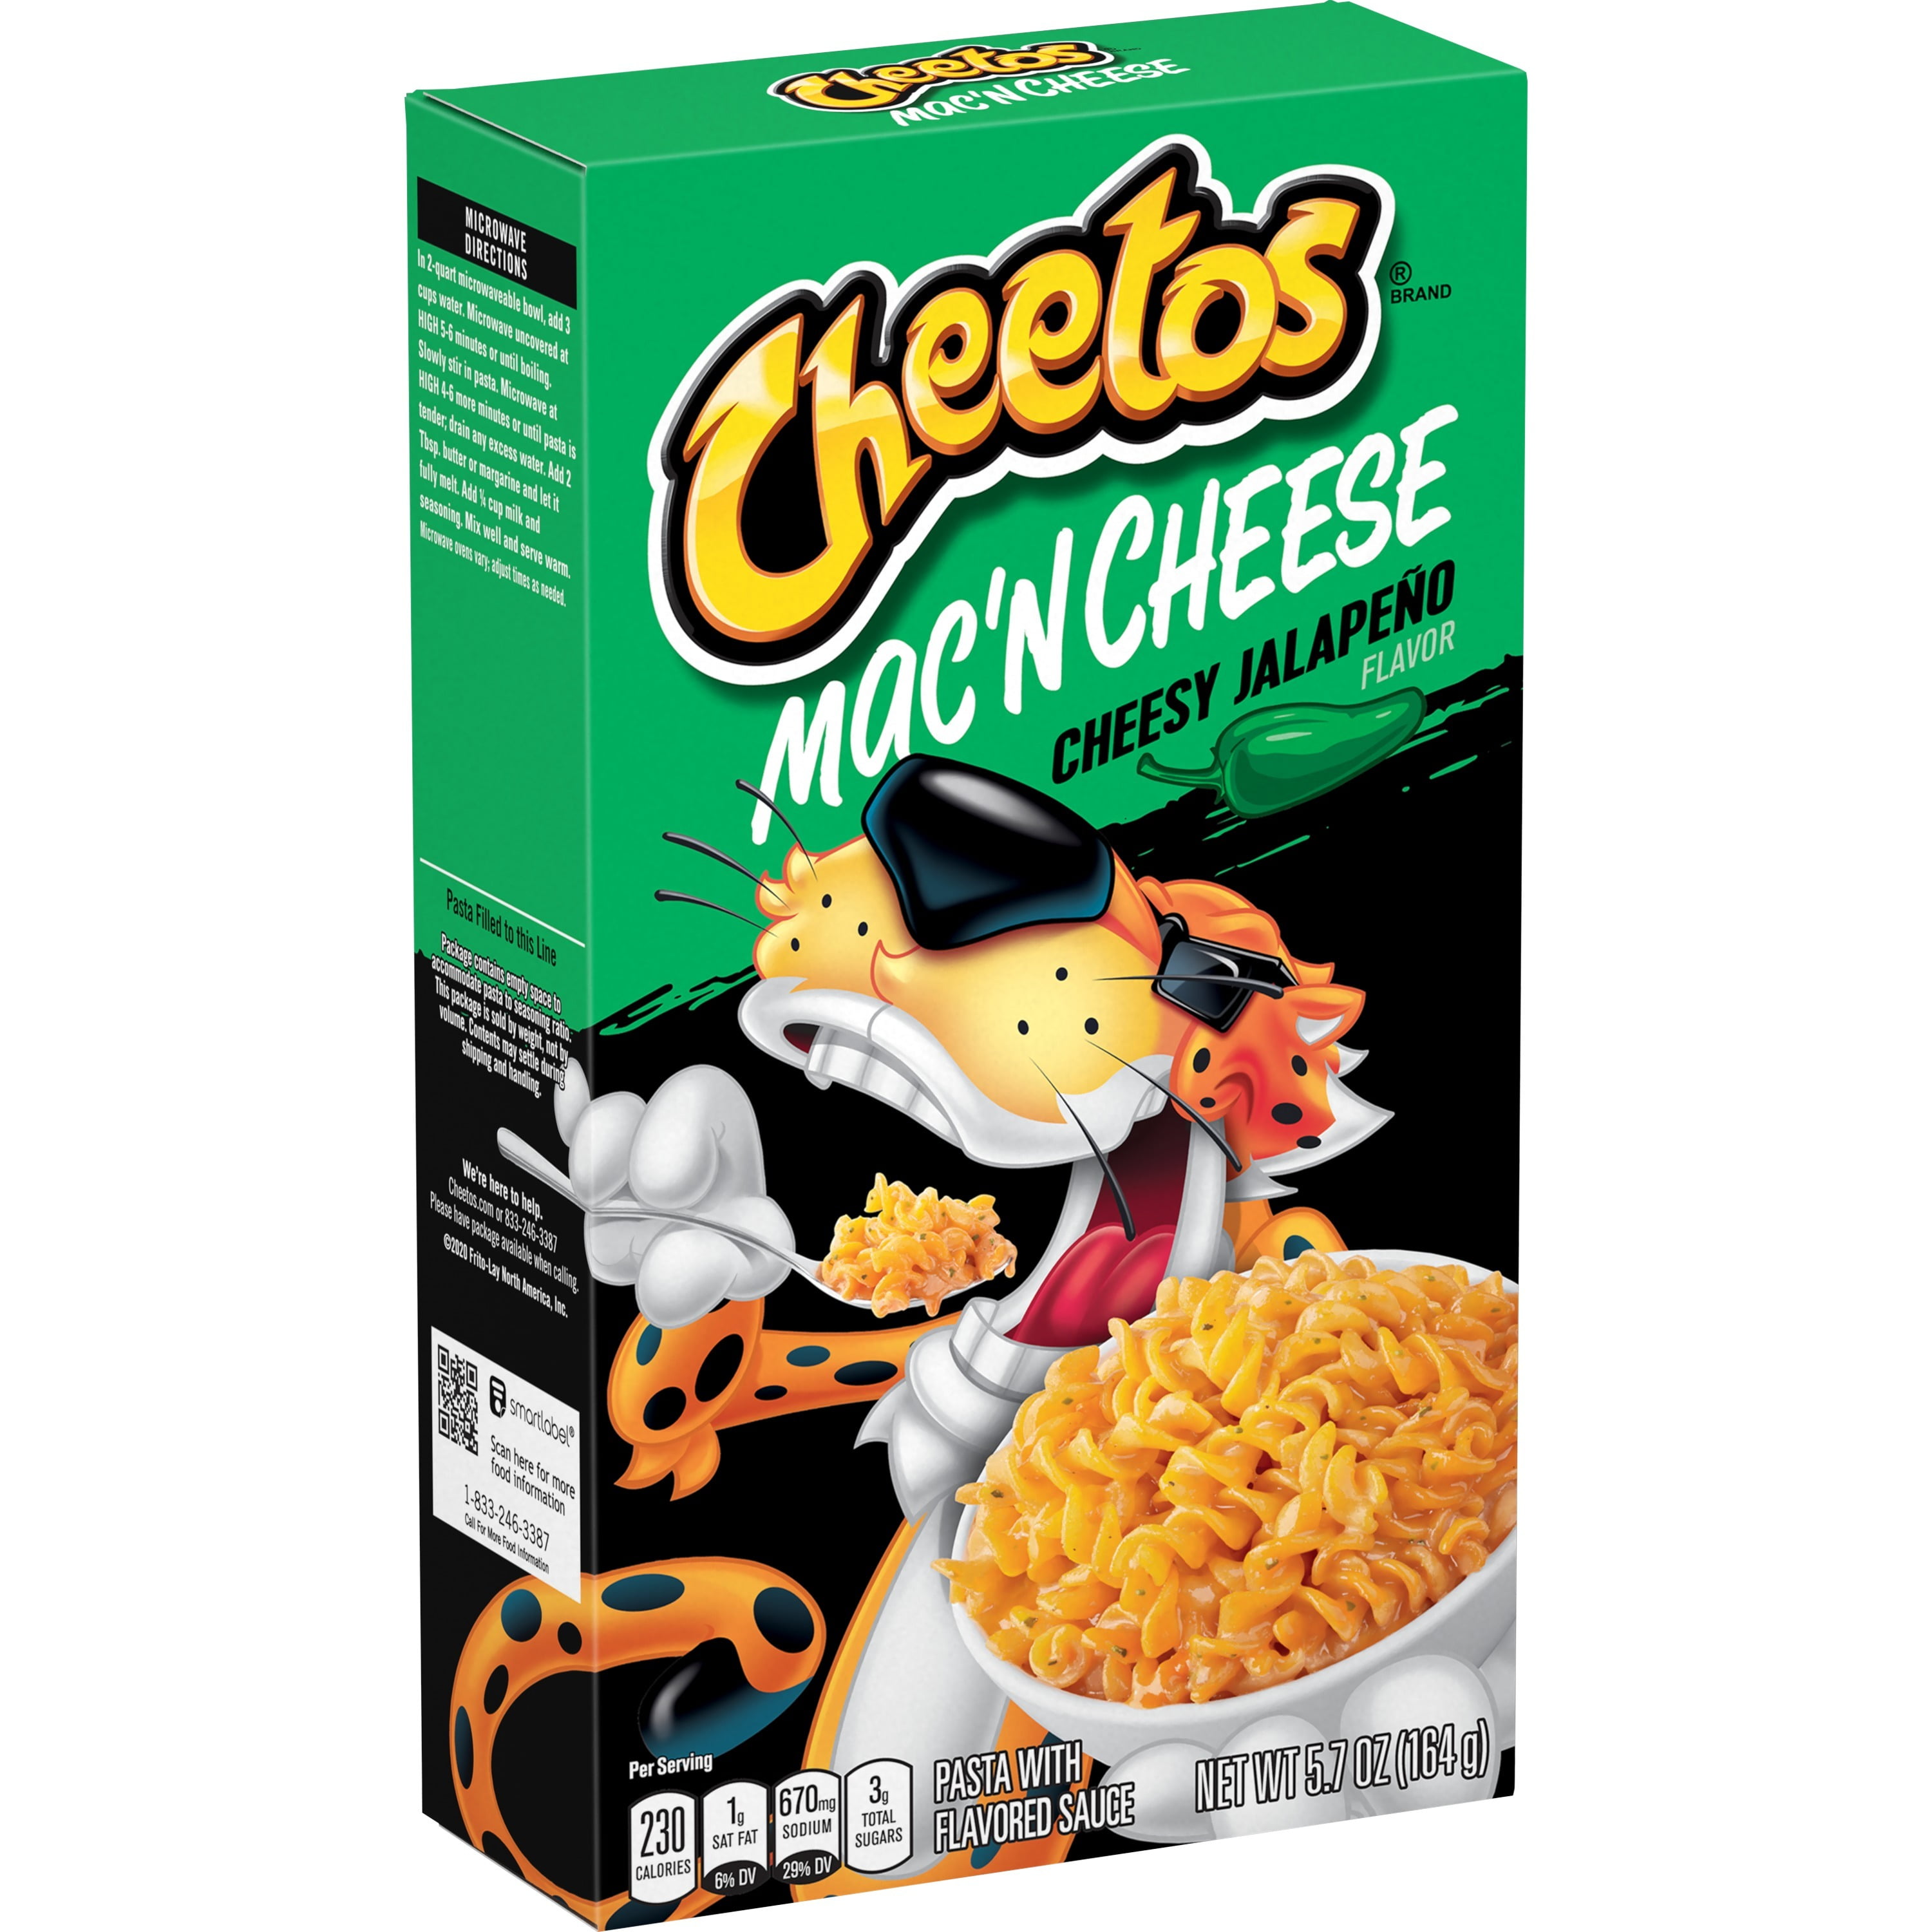 Cheetos Cheddar Jalapeno Knee Socks